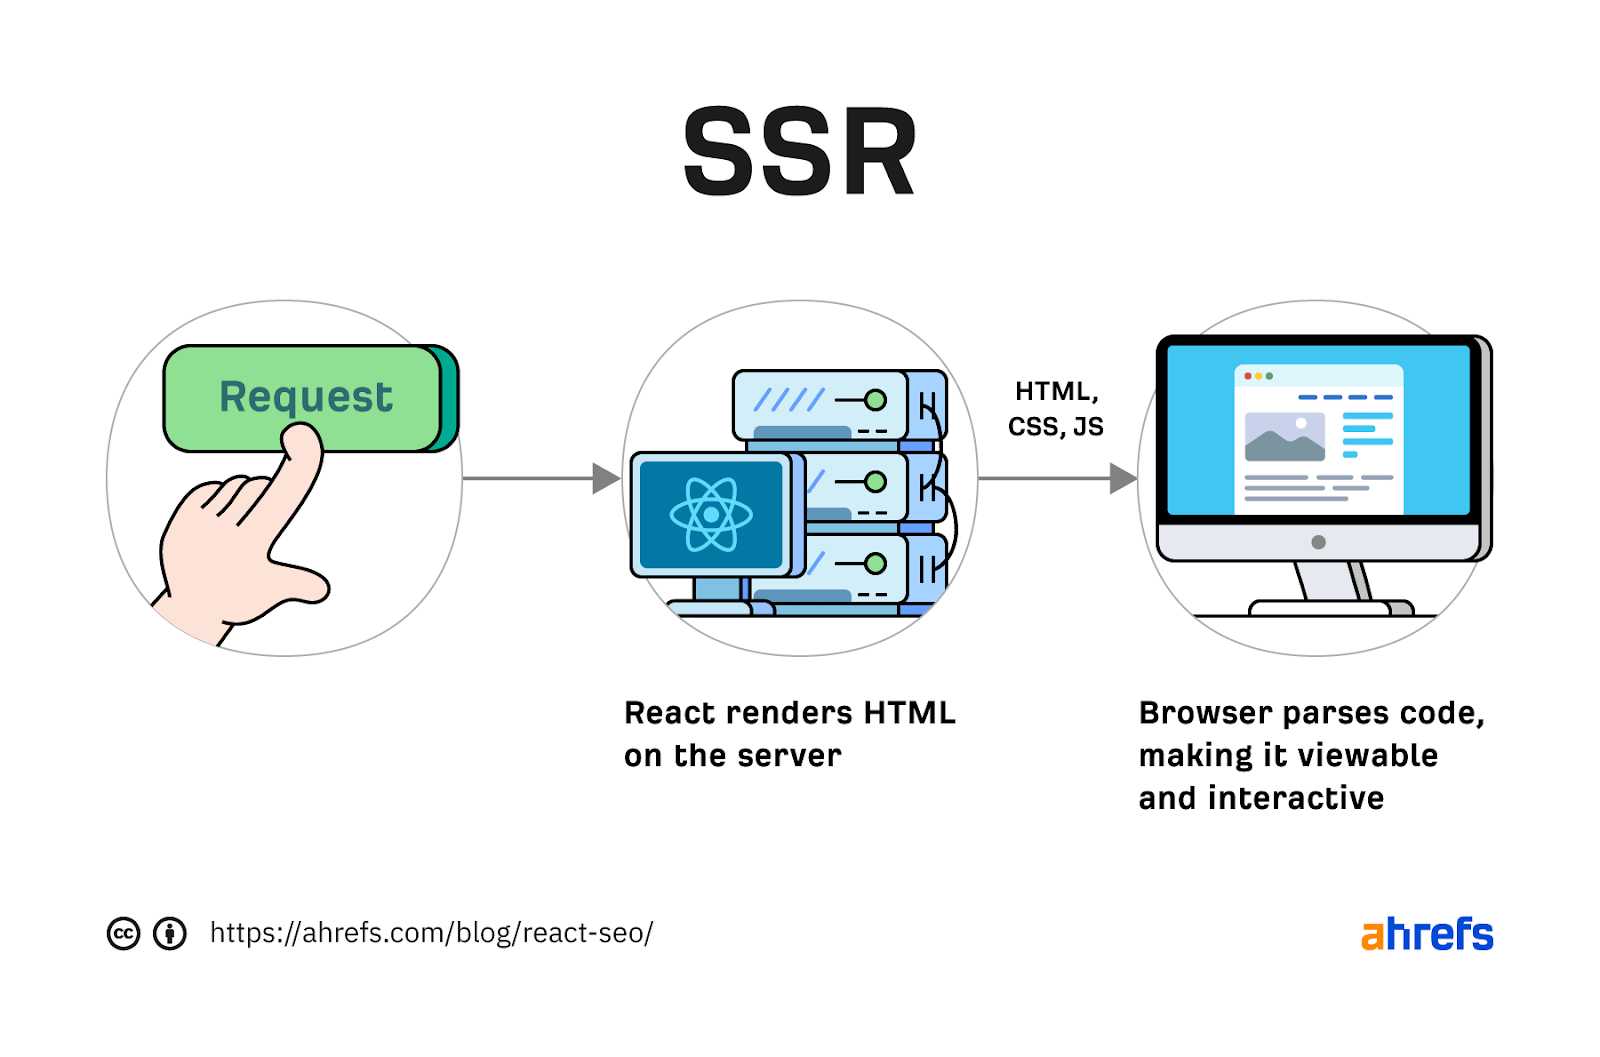 Flowchart showing the SSR process 